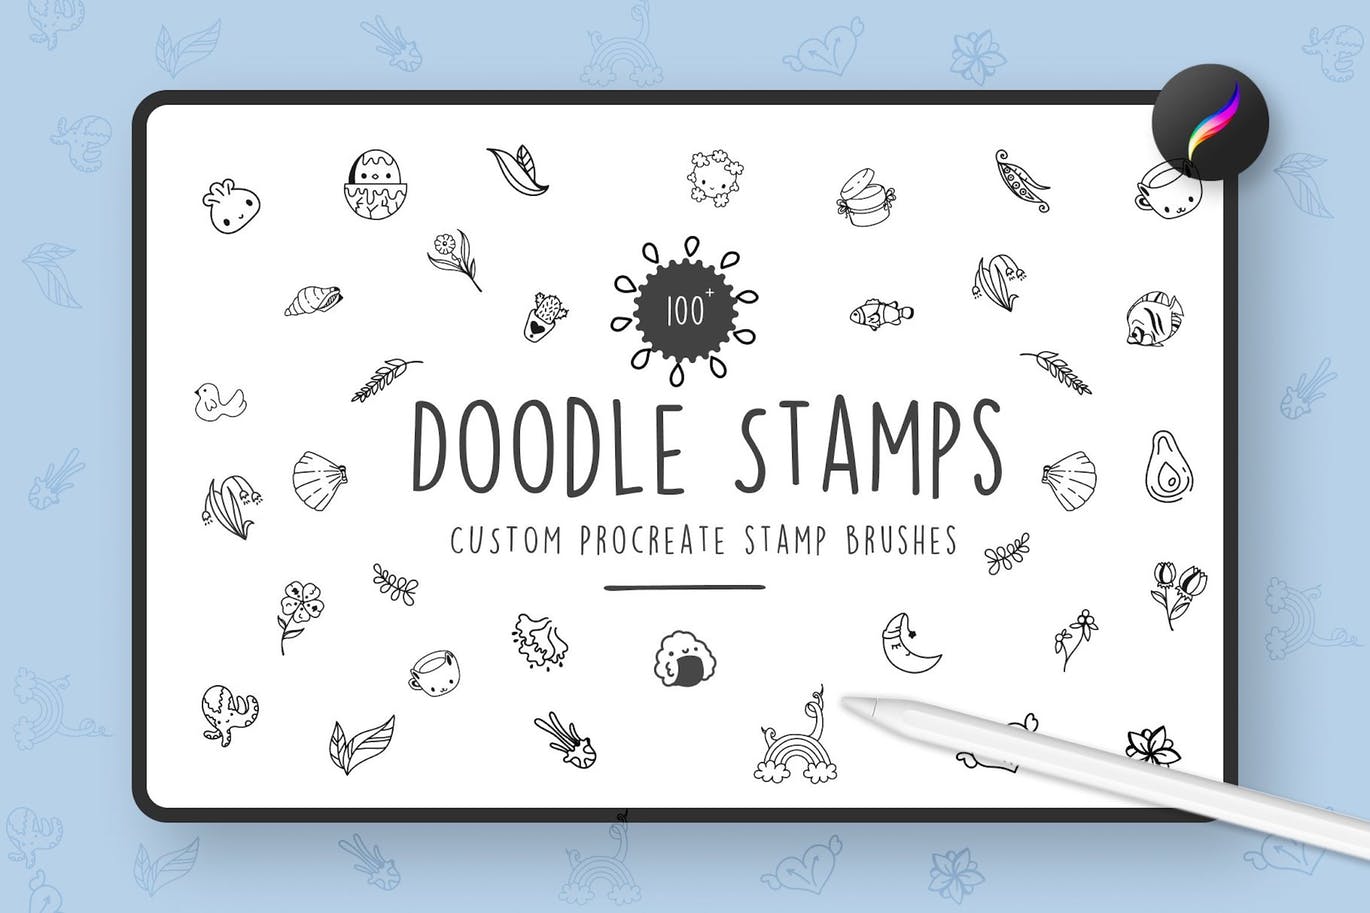 Procreate涂鸦印章笔刷套件 PROODLE Procreate Doodle Stamps 笔刷资源 第1张